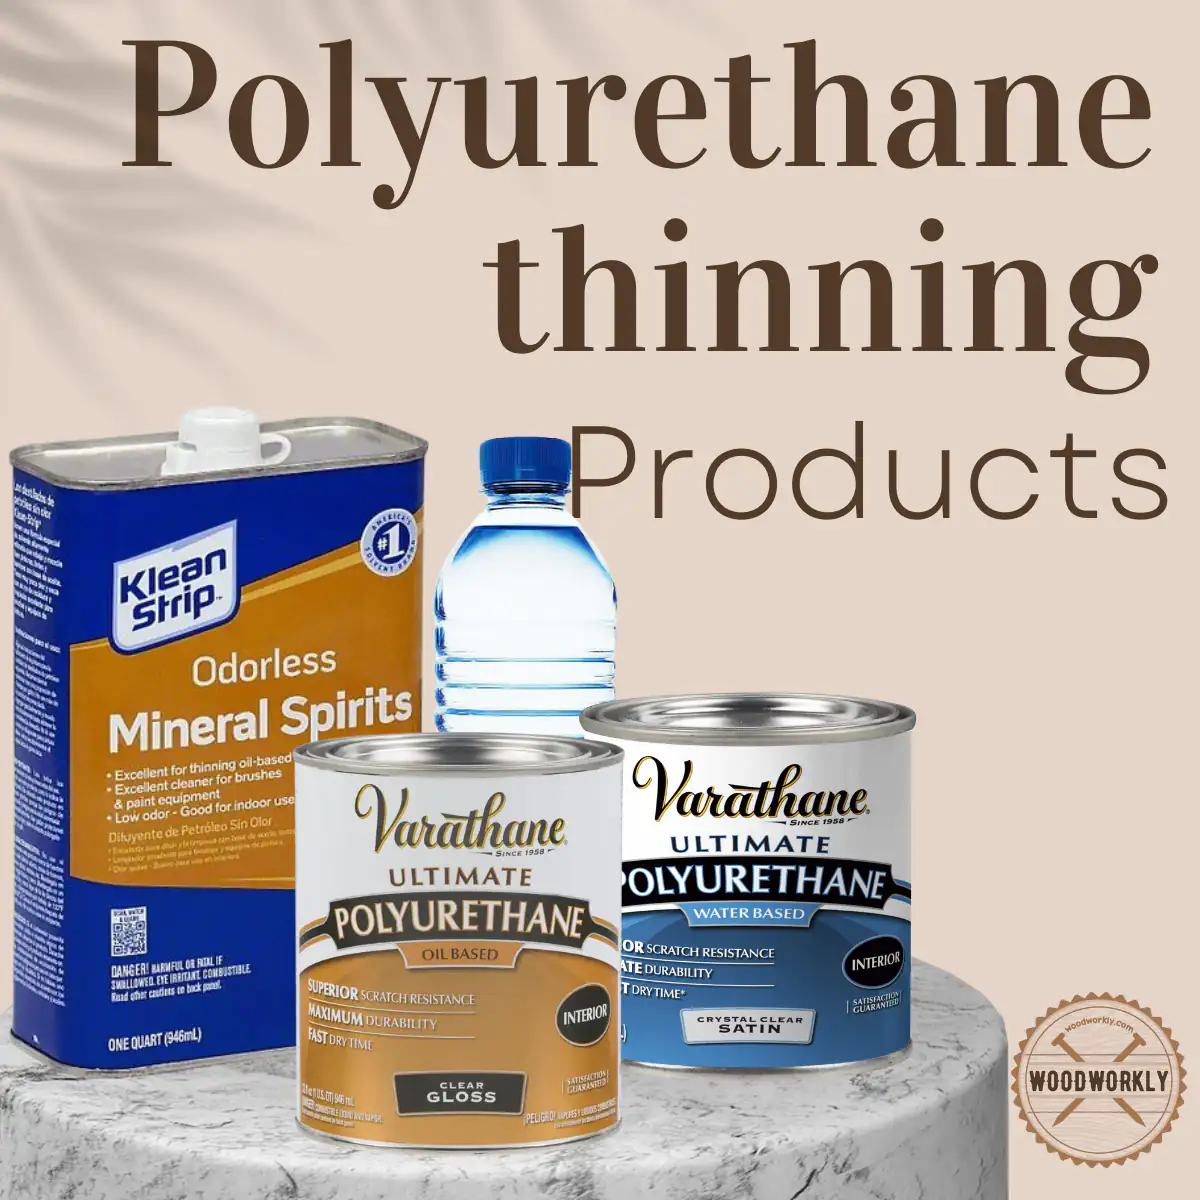 Polyurethane thinning products